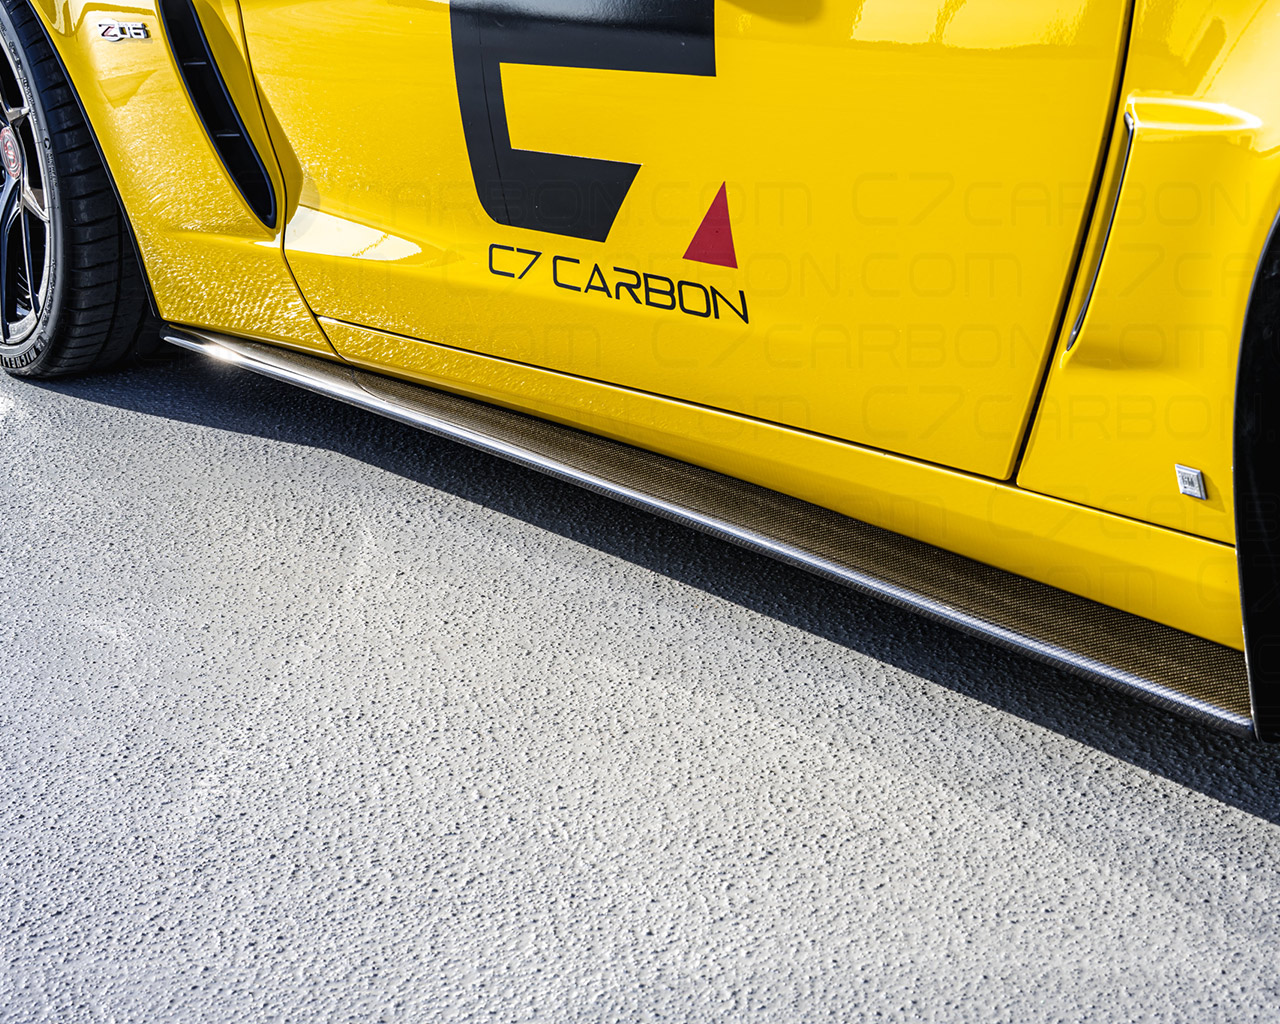 C6 Corvette ZR1 Extended Side Skirts with Mudflaps,  Carbon Fiber